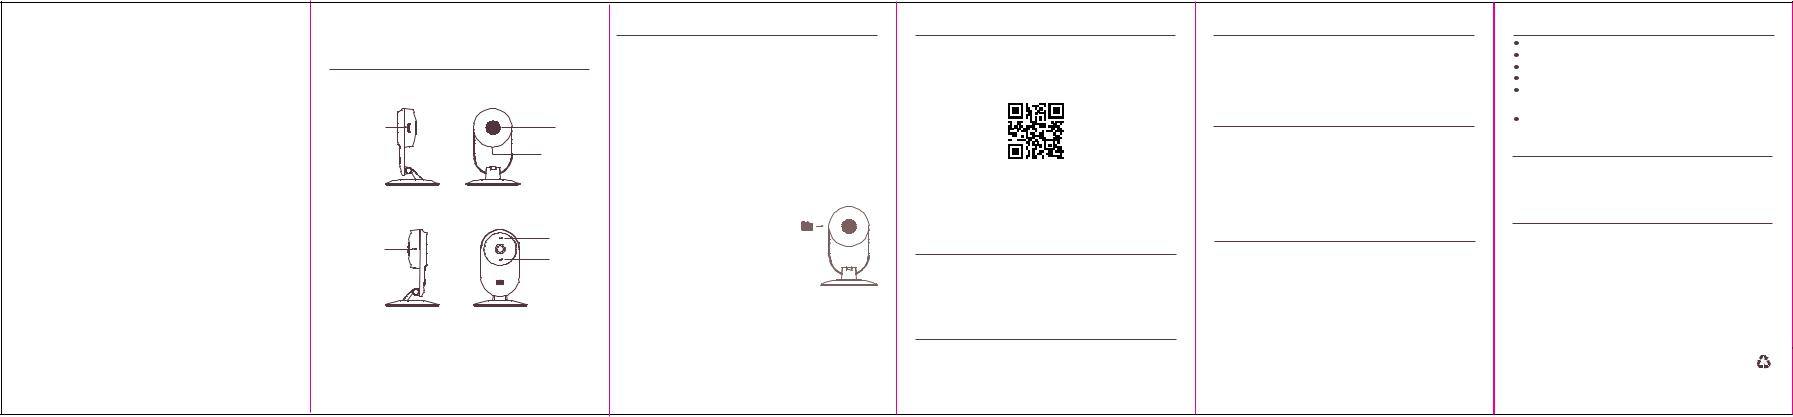 Xiaomi Mi Home Security Camera Basic User Manual